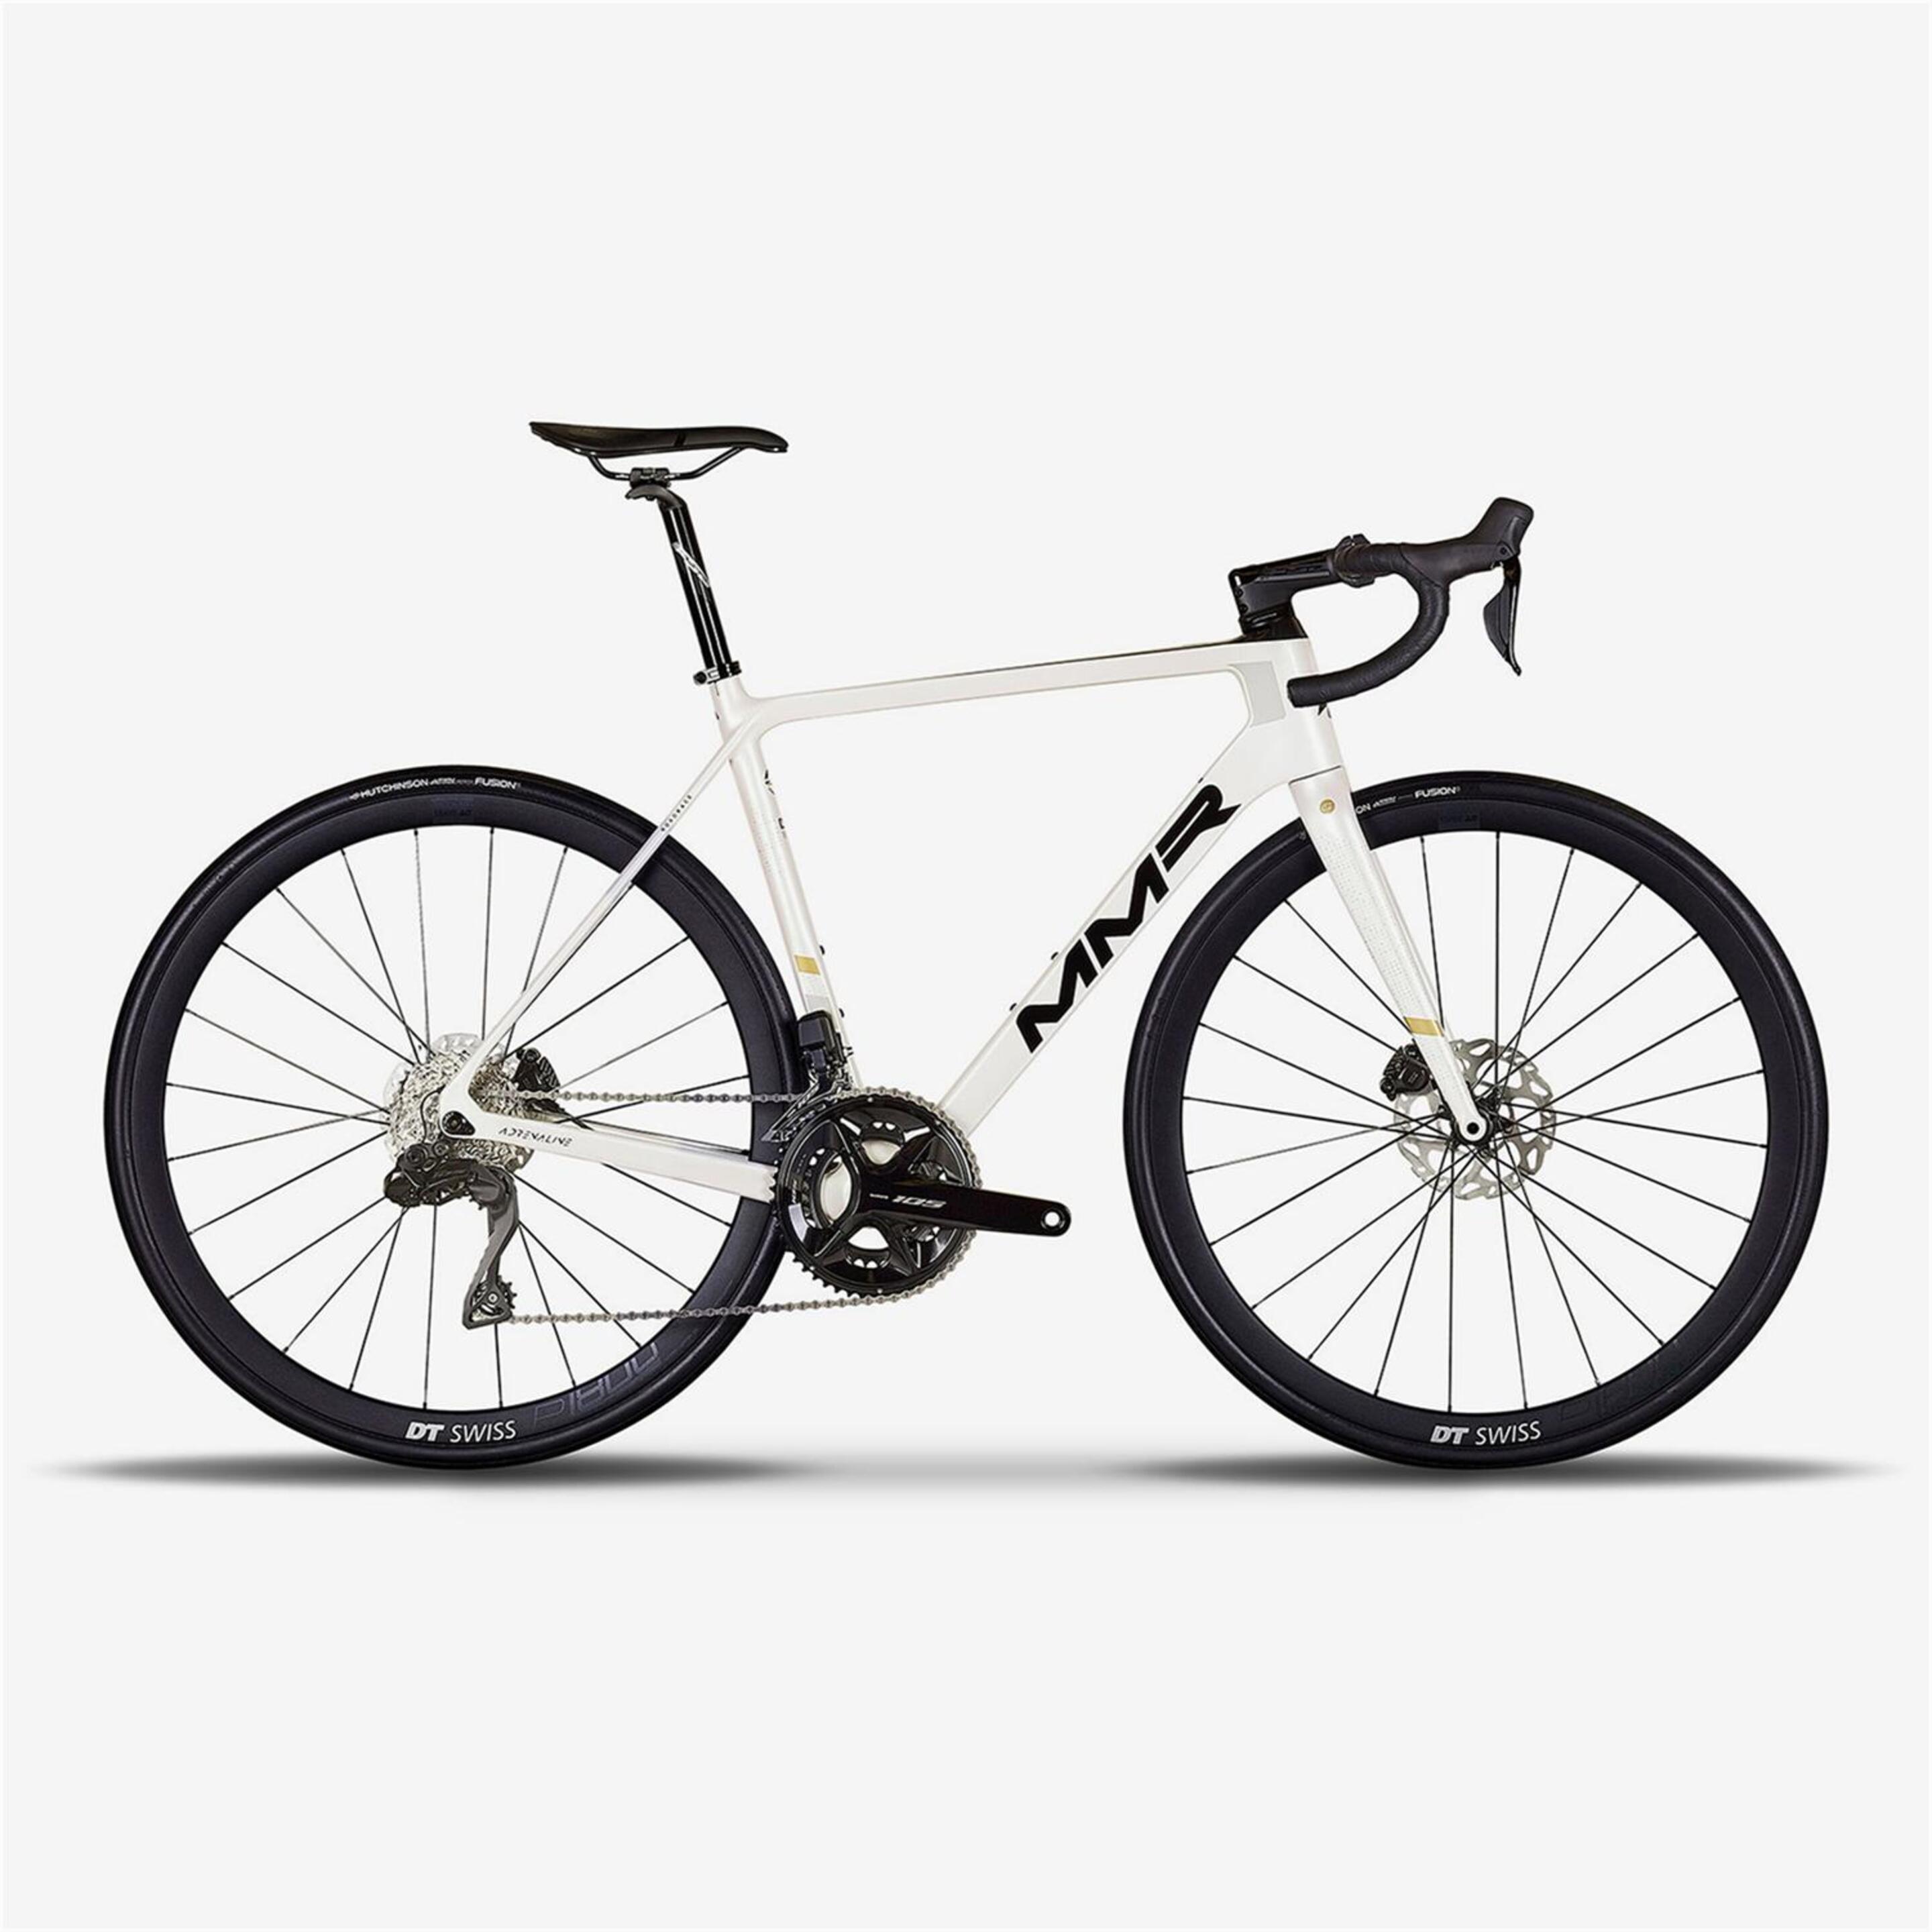 MMR Adrenaline 50 - blanco - Bicicleta Carretera